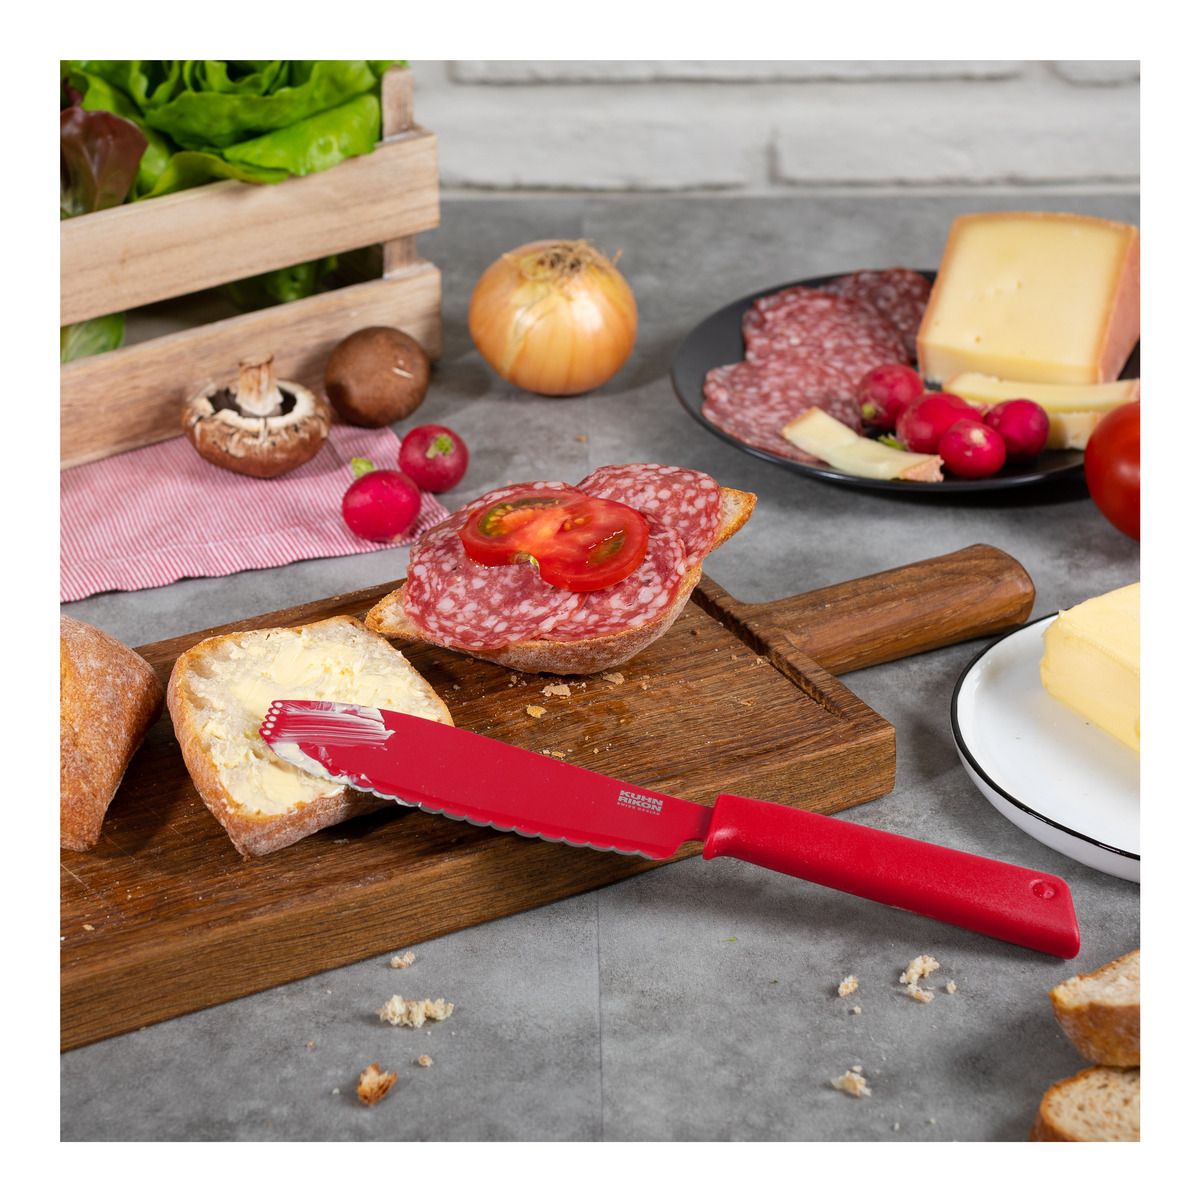 COLORI+ Sandwich Knife - Red, Kuhn Rikon